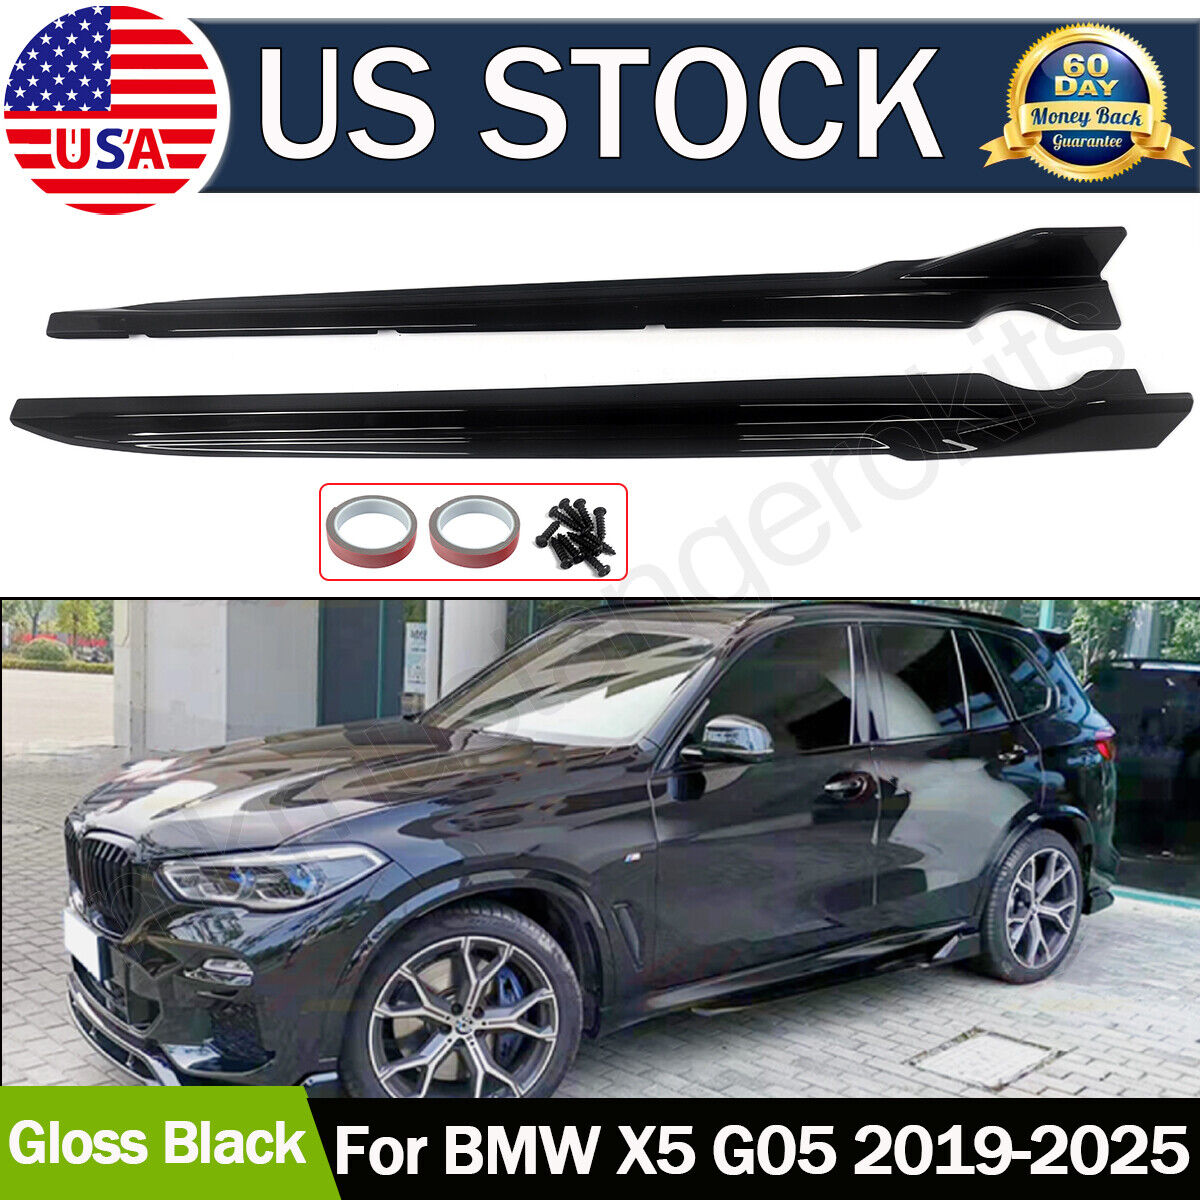 2x Fits BMW G05 X5 M Sport 2019-2025 Gloss Black Body Side Skirts Lip Extensions